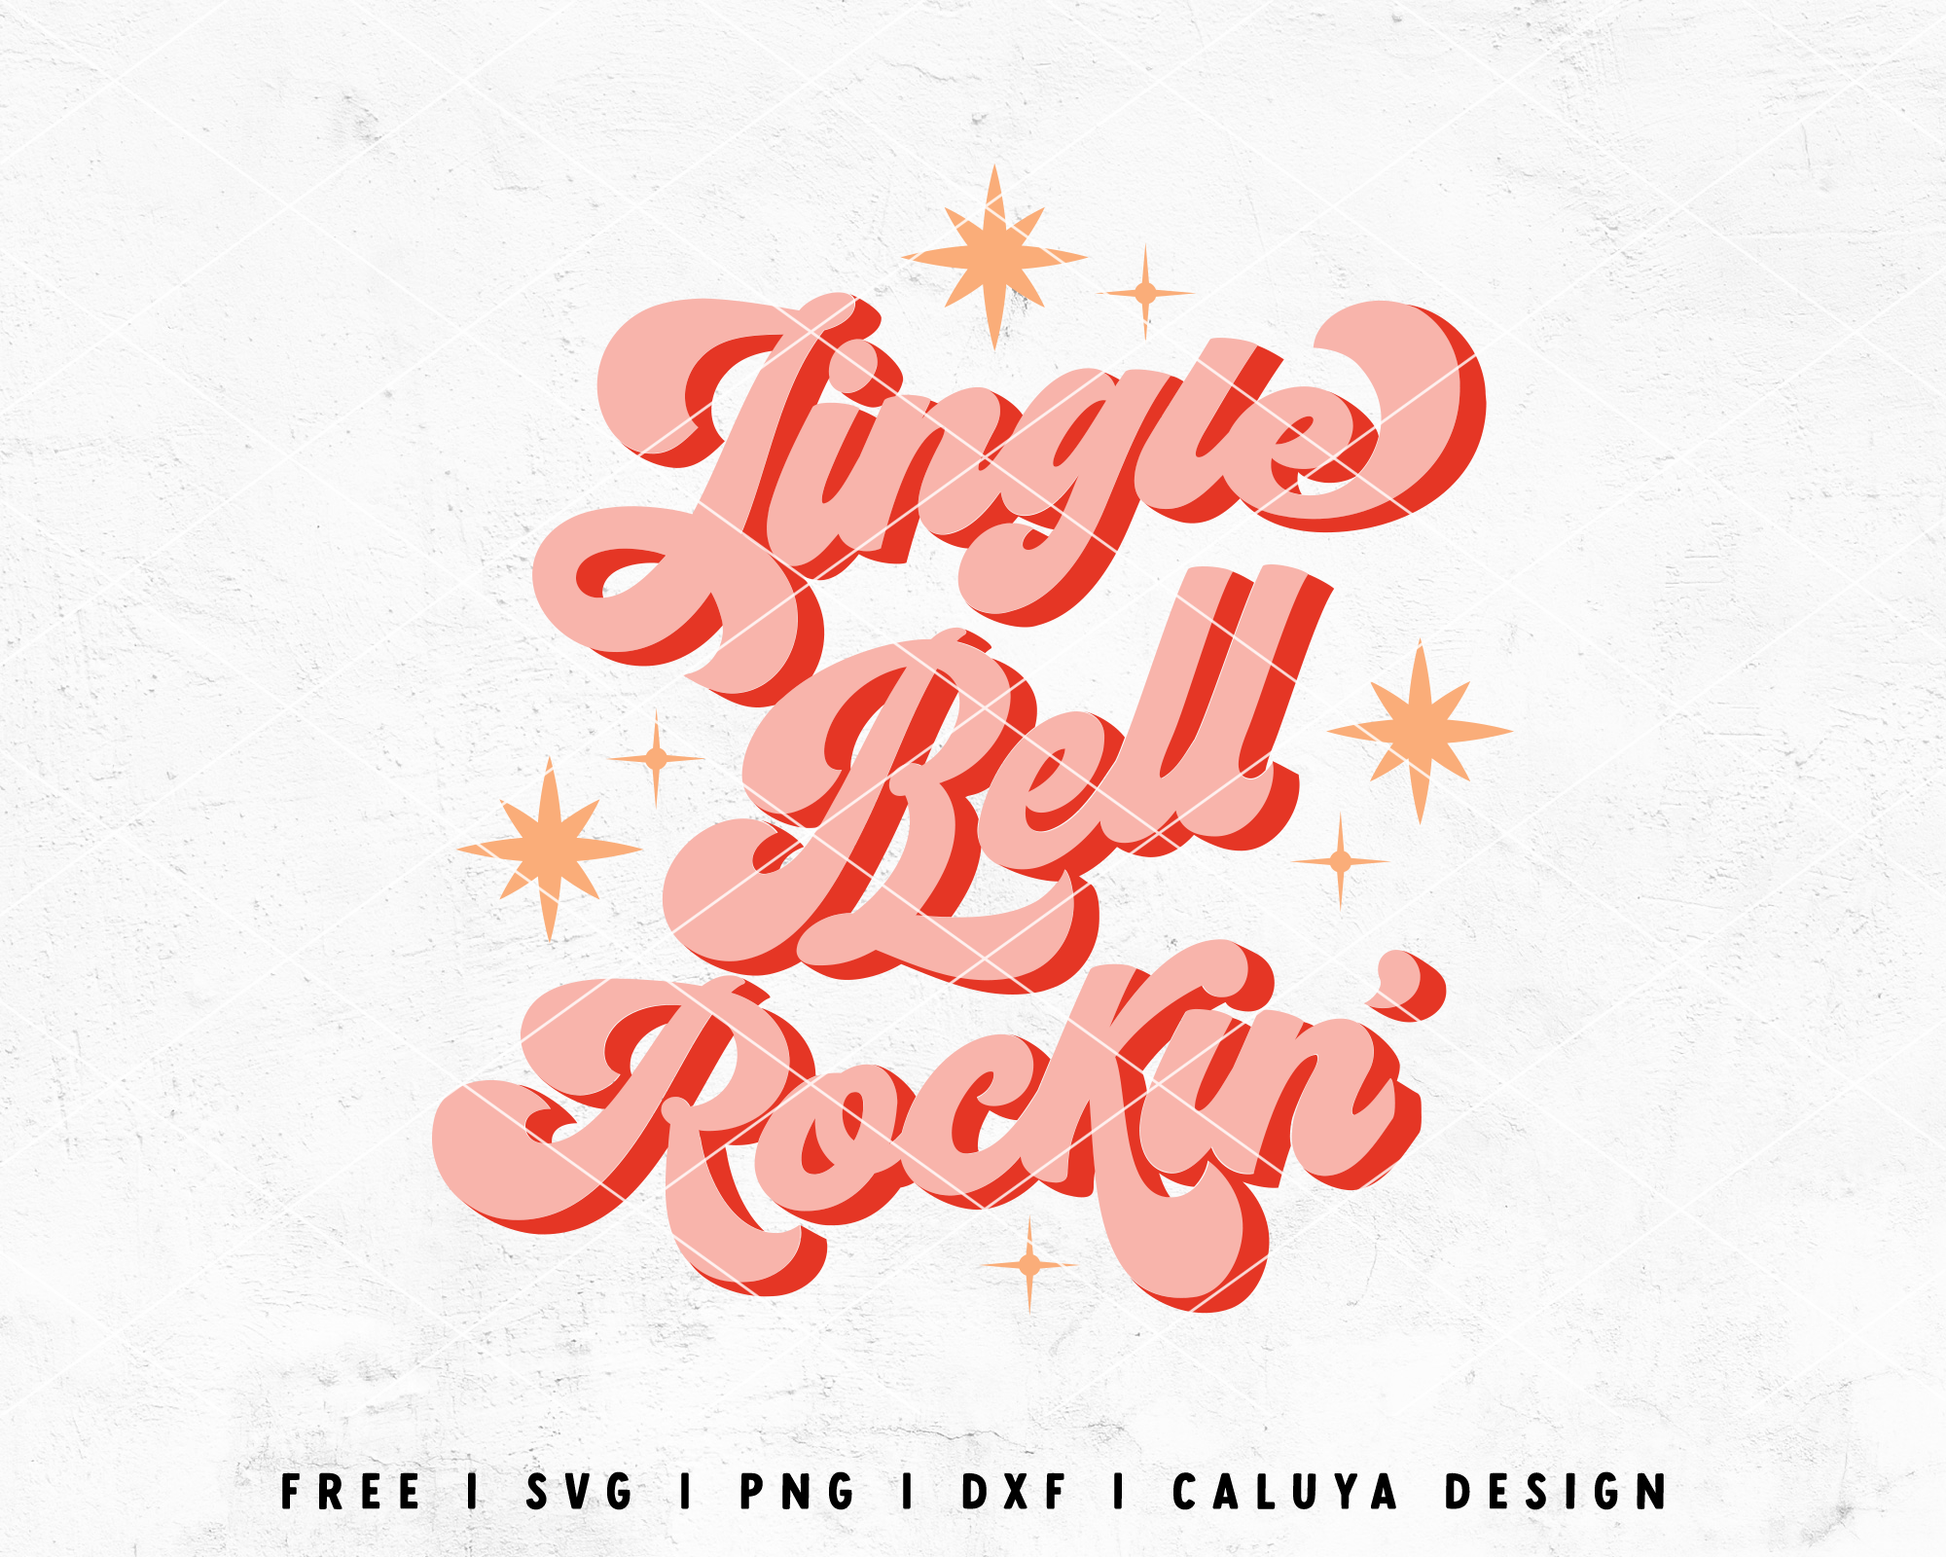 FREE Jingle Bell Rockin' SVG | Retro Christmas SVG Cut File for Cricut, Cameo Silhouette | Free SVG Cut File